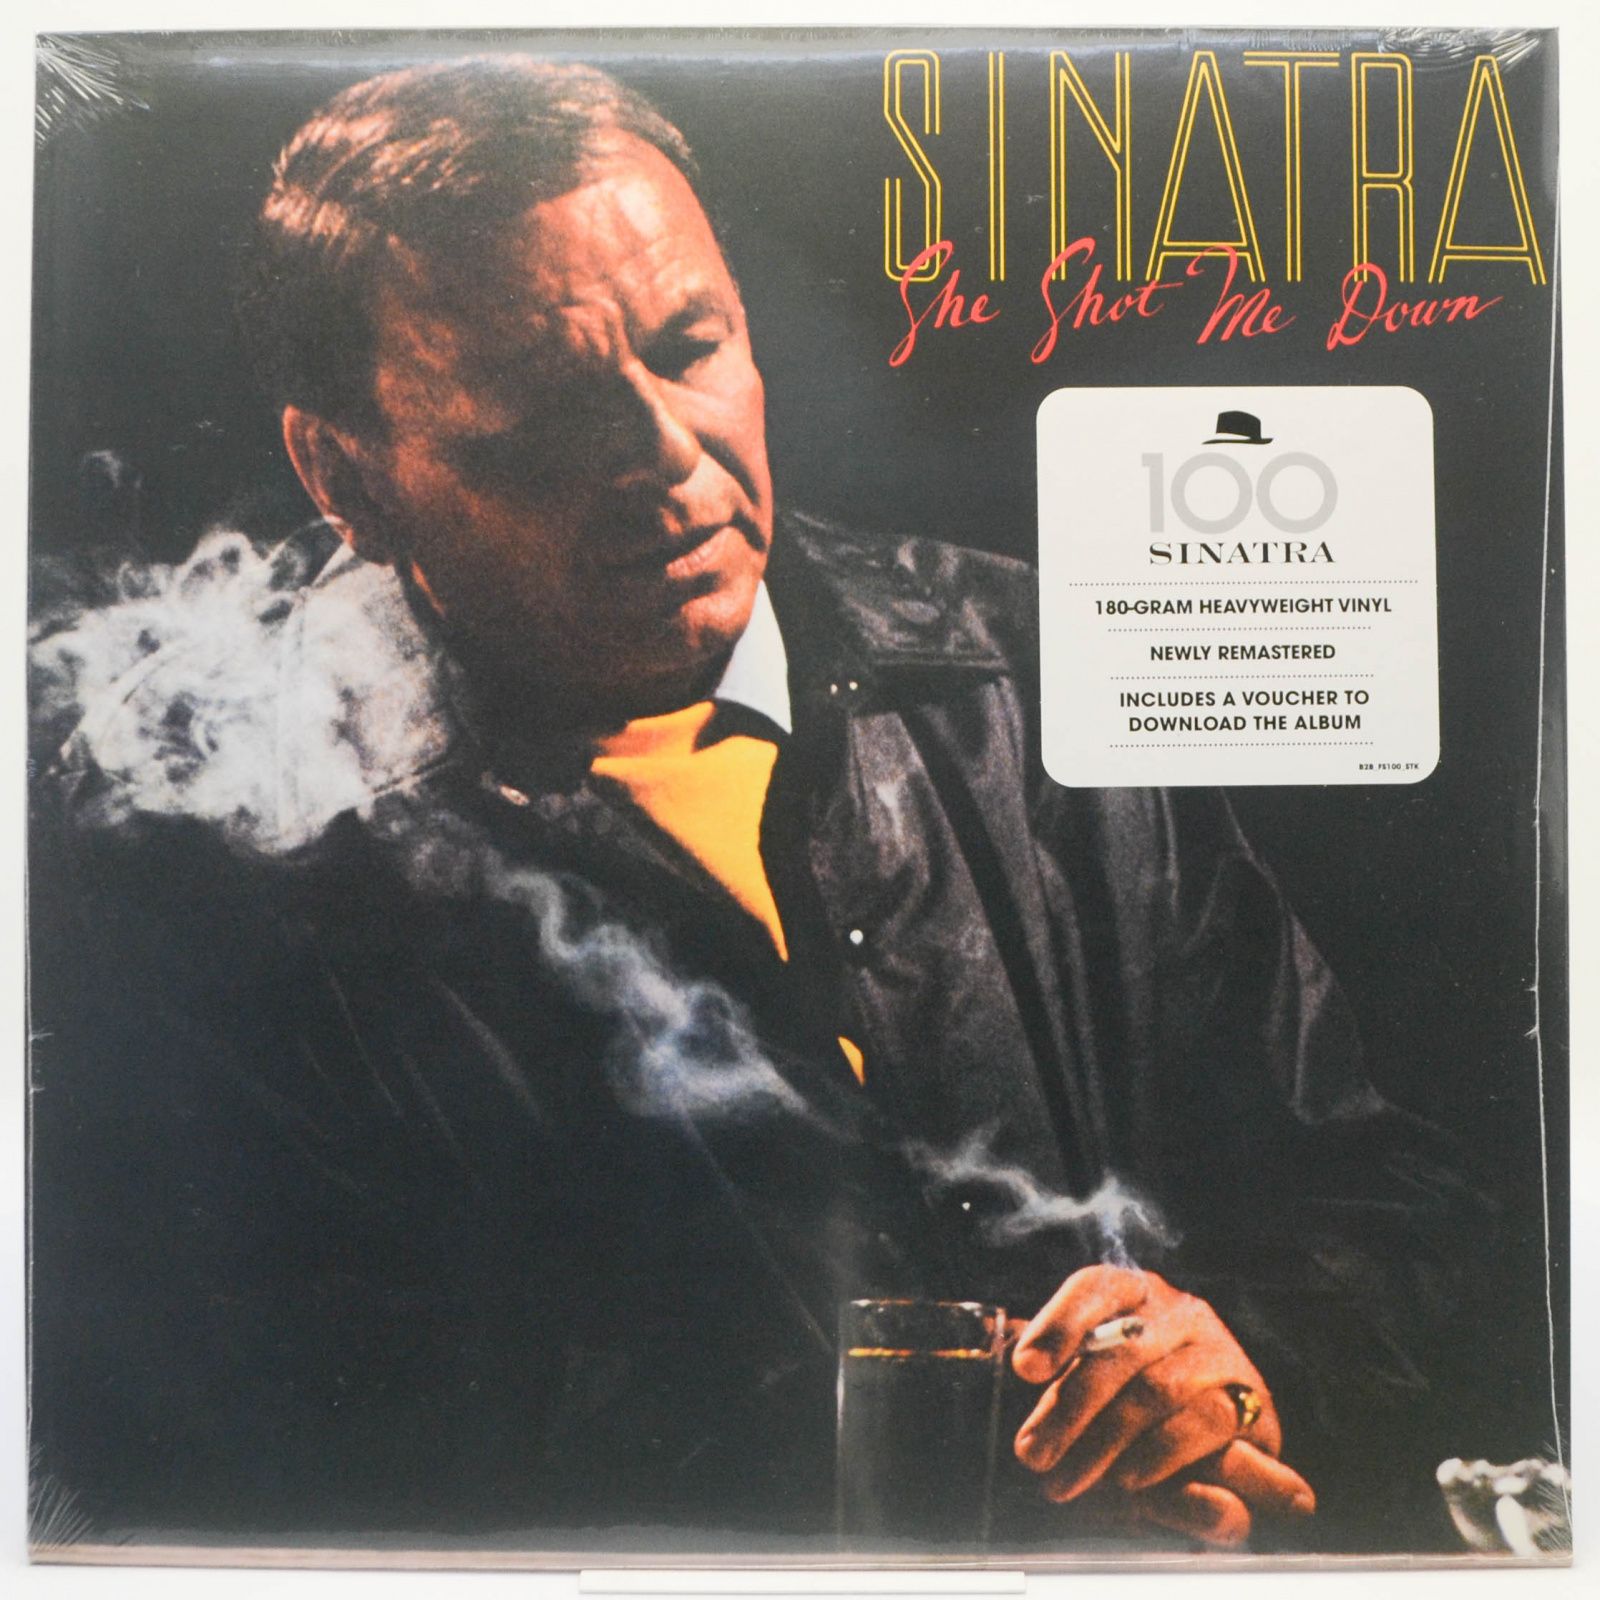 Frank Sinatra — She Shot Me Down, 2014